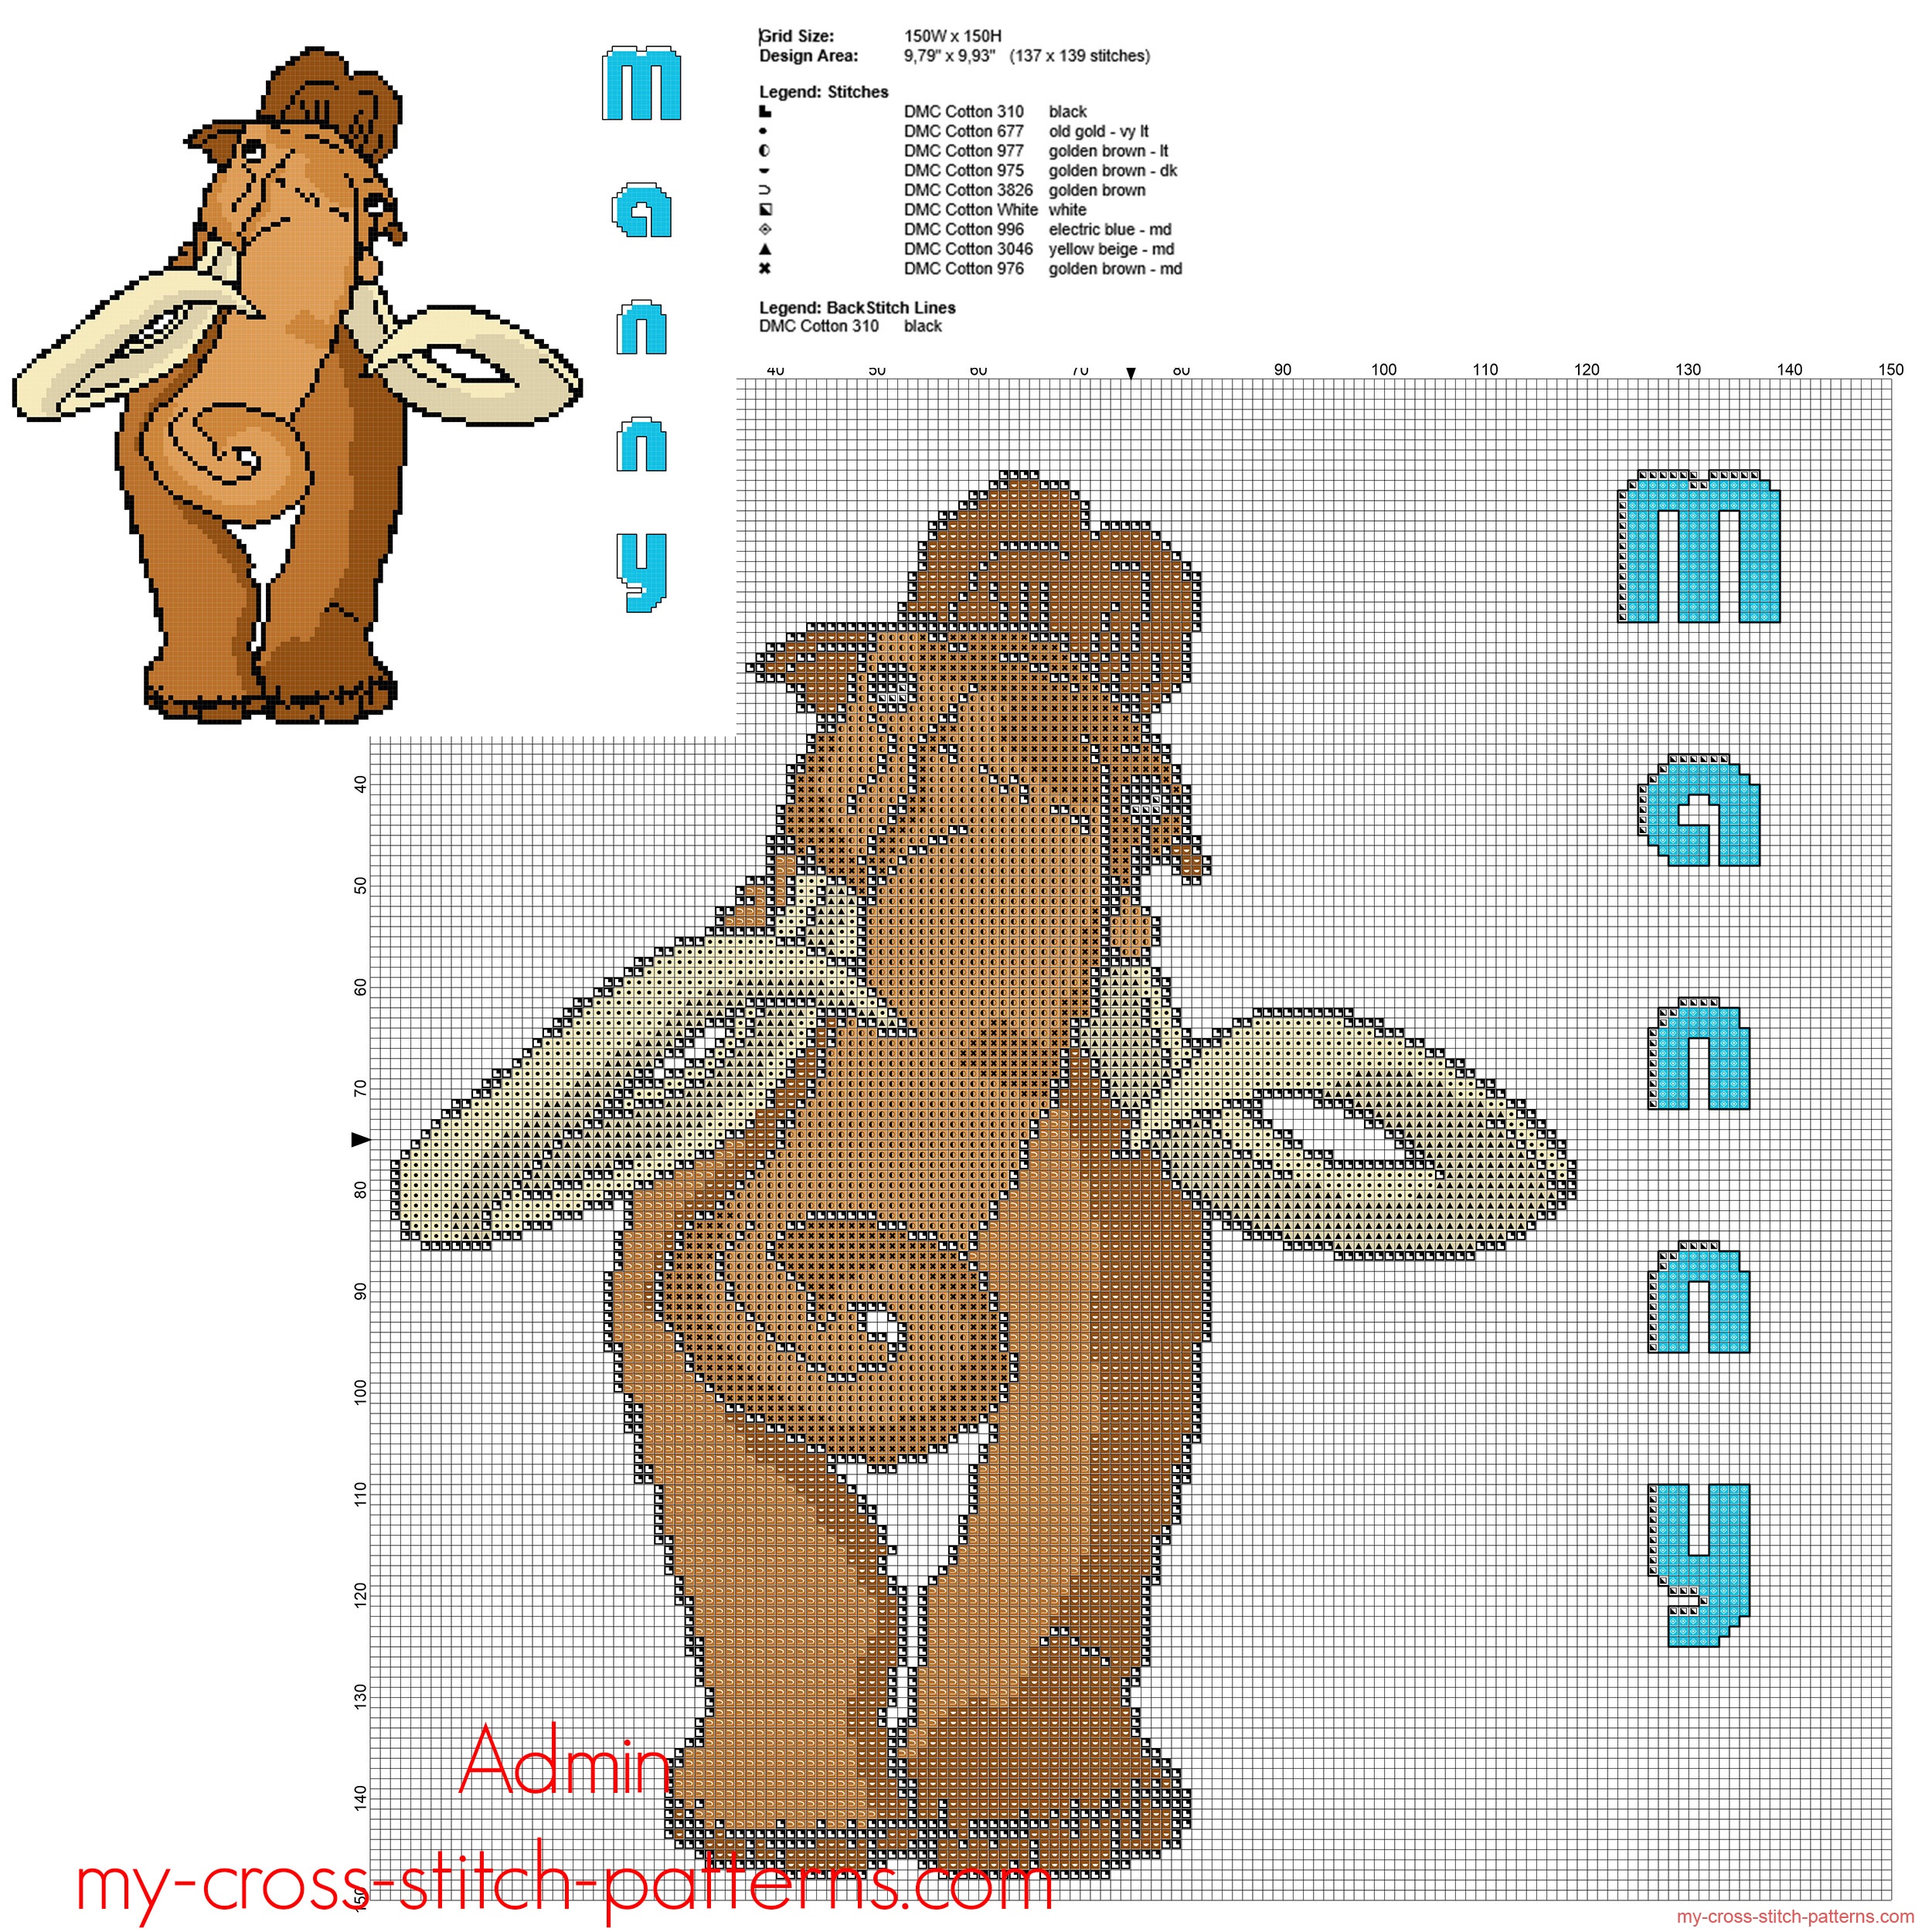 manfred_manny_mammoth_ice_age_character_free_cross_stitch_pattern_big_size